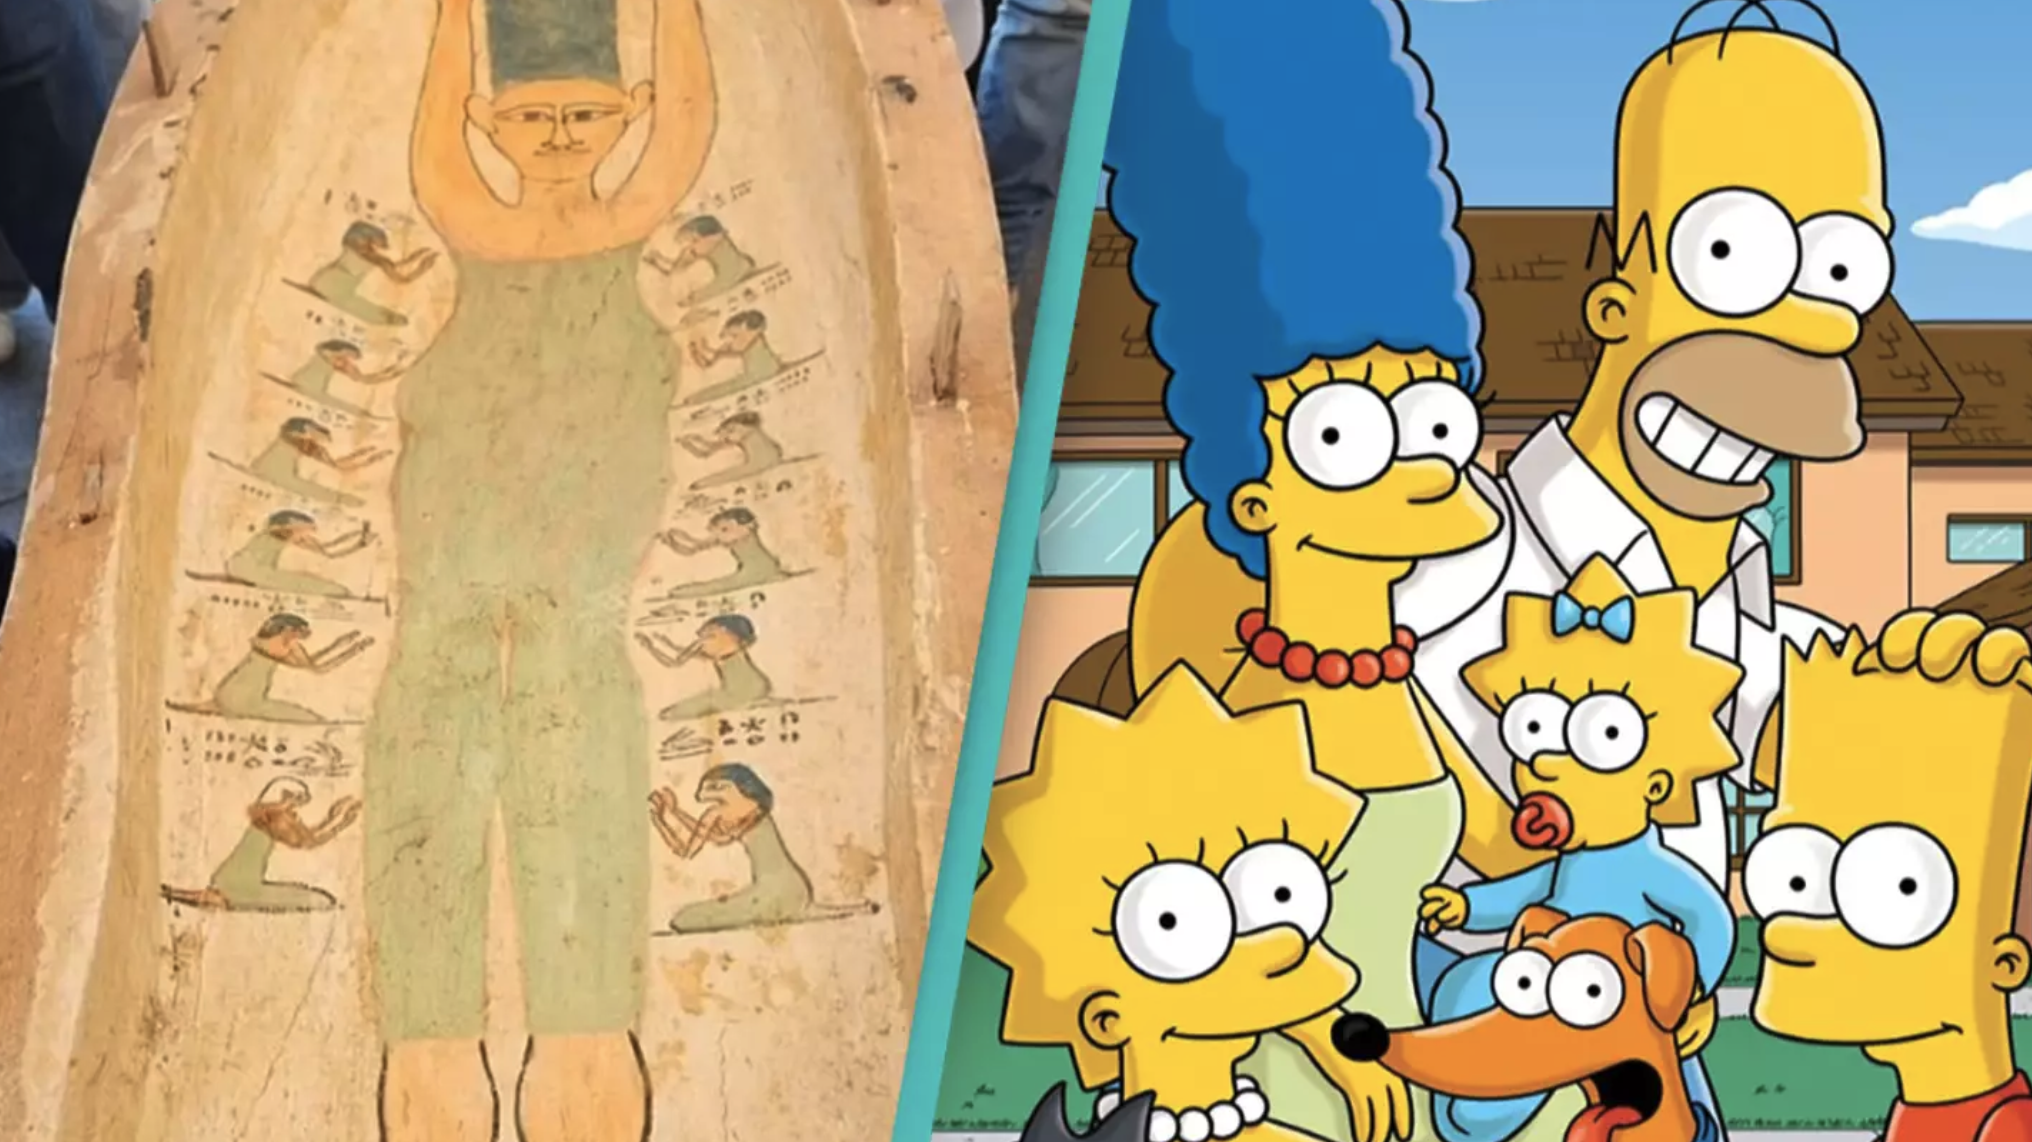 Marge Simpson makes a cameo on an ancient Egyptian sarcophagus